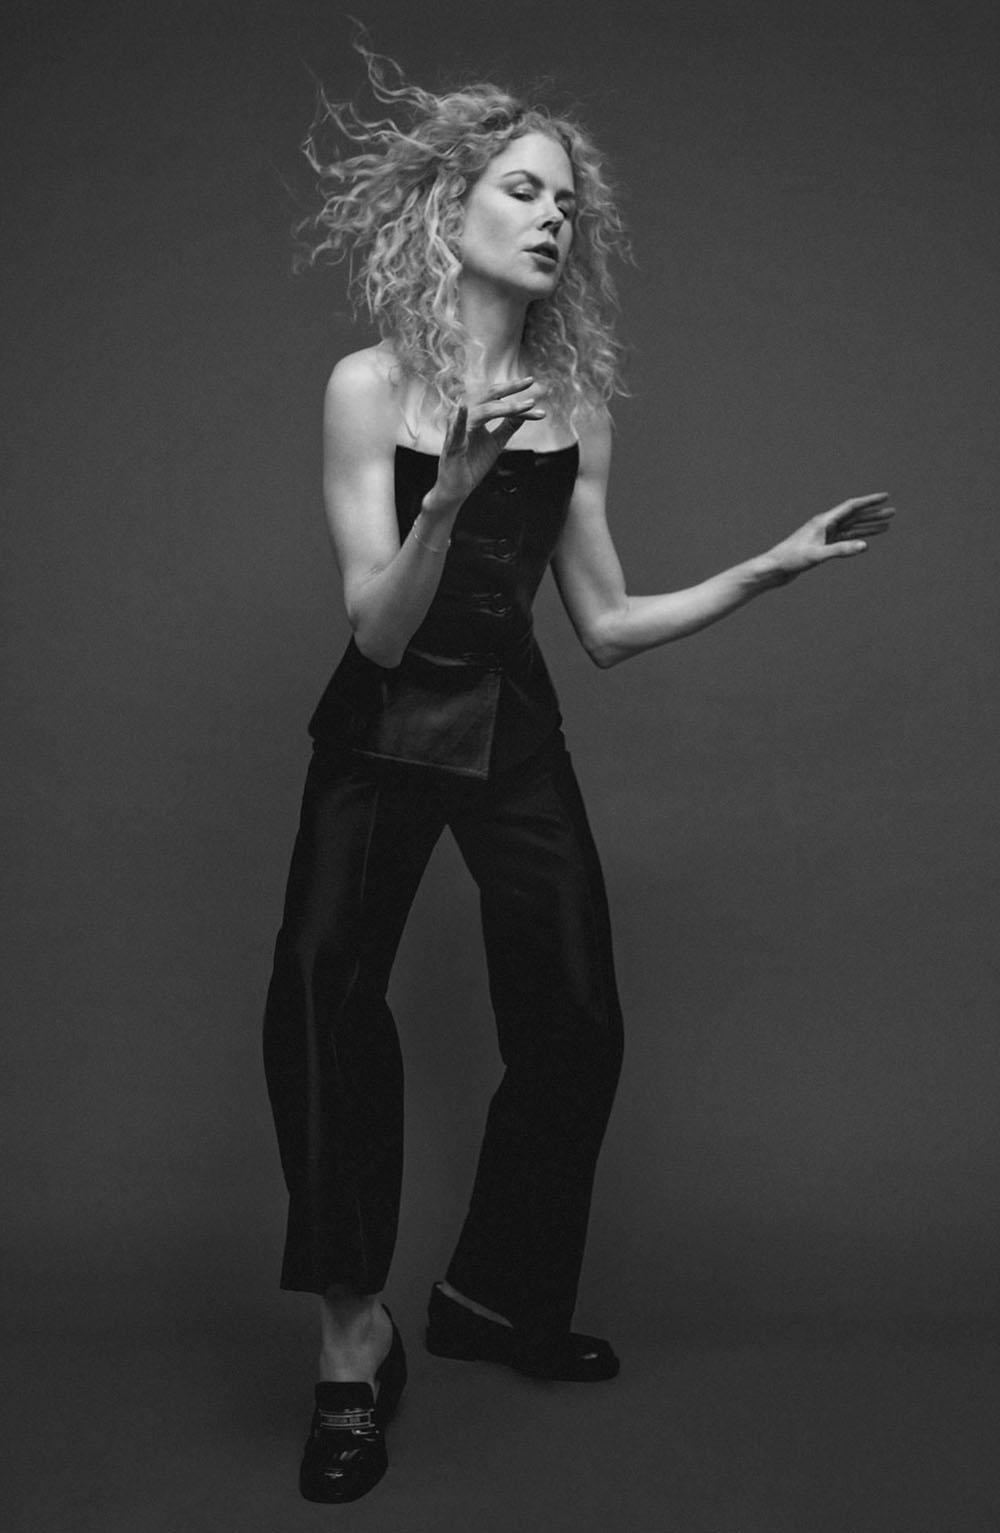 Nicole Kidman covers WSJ. Magazine May 2020 by Bibi Cornejo Borthwick